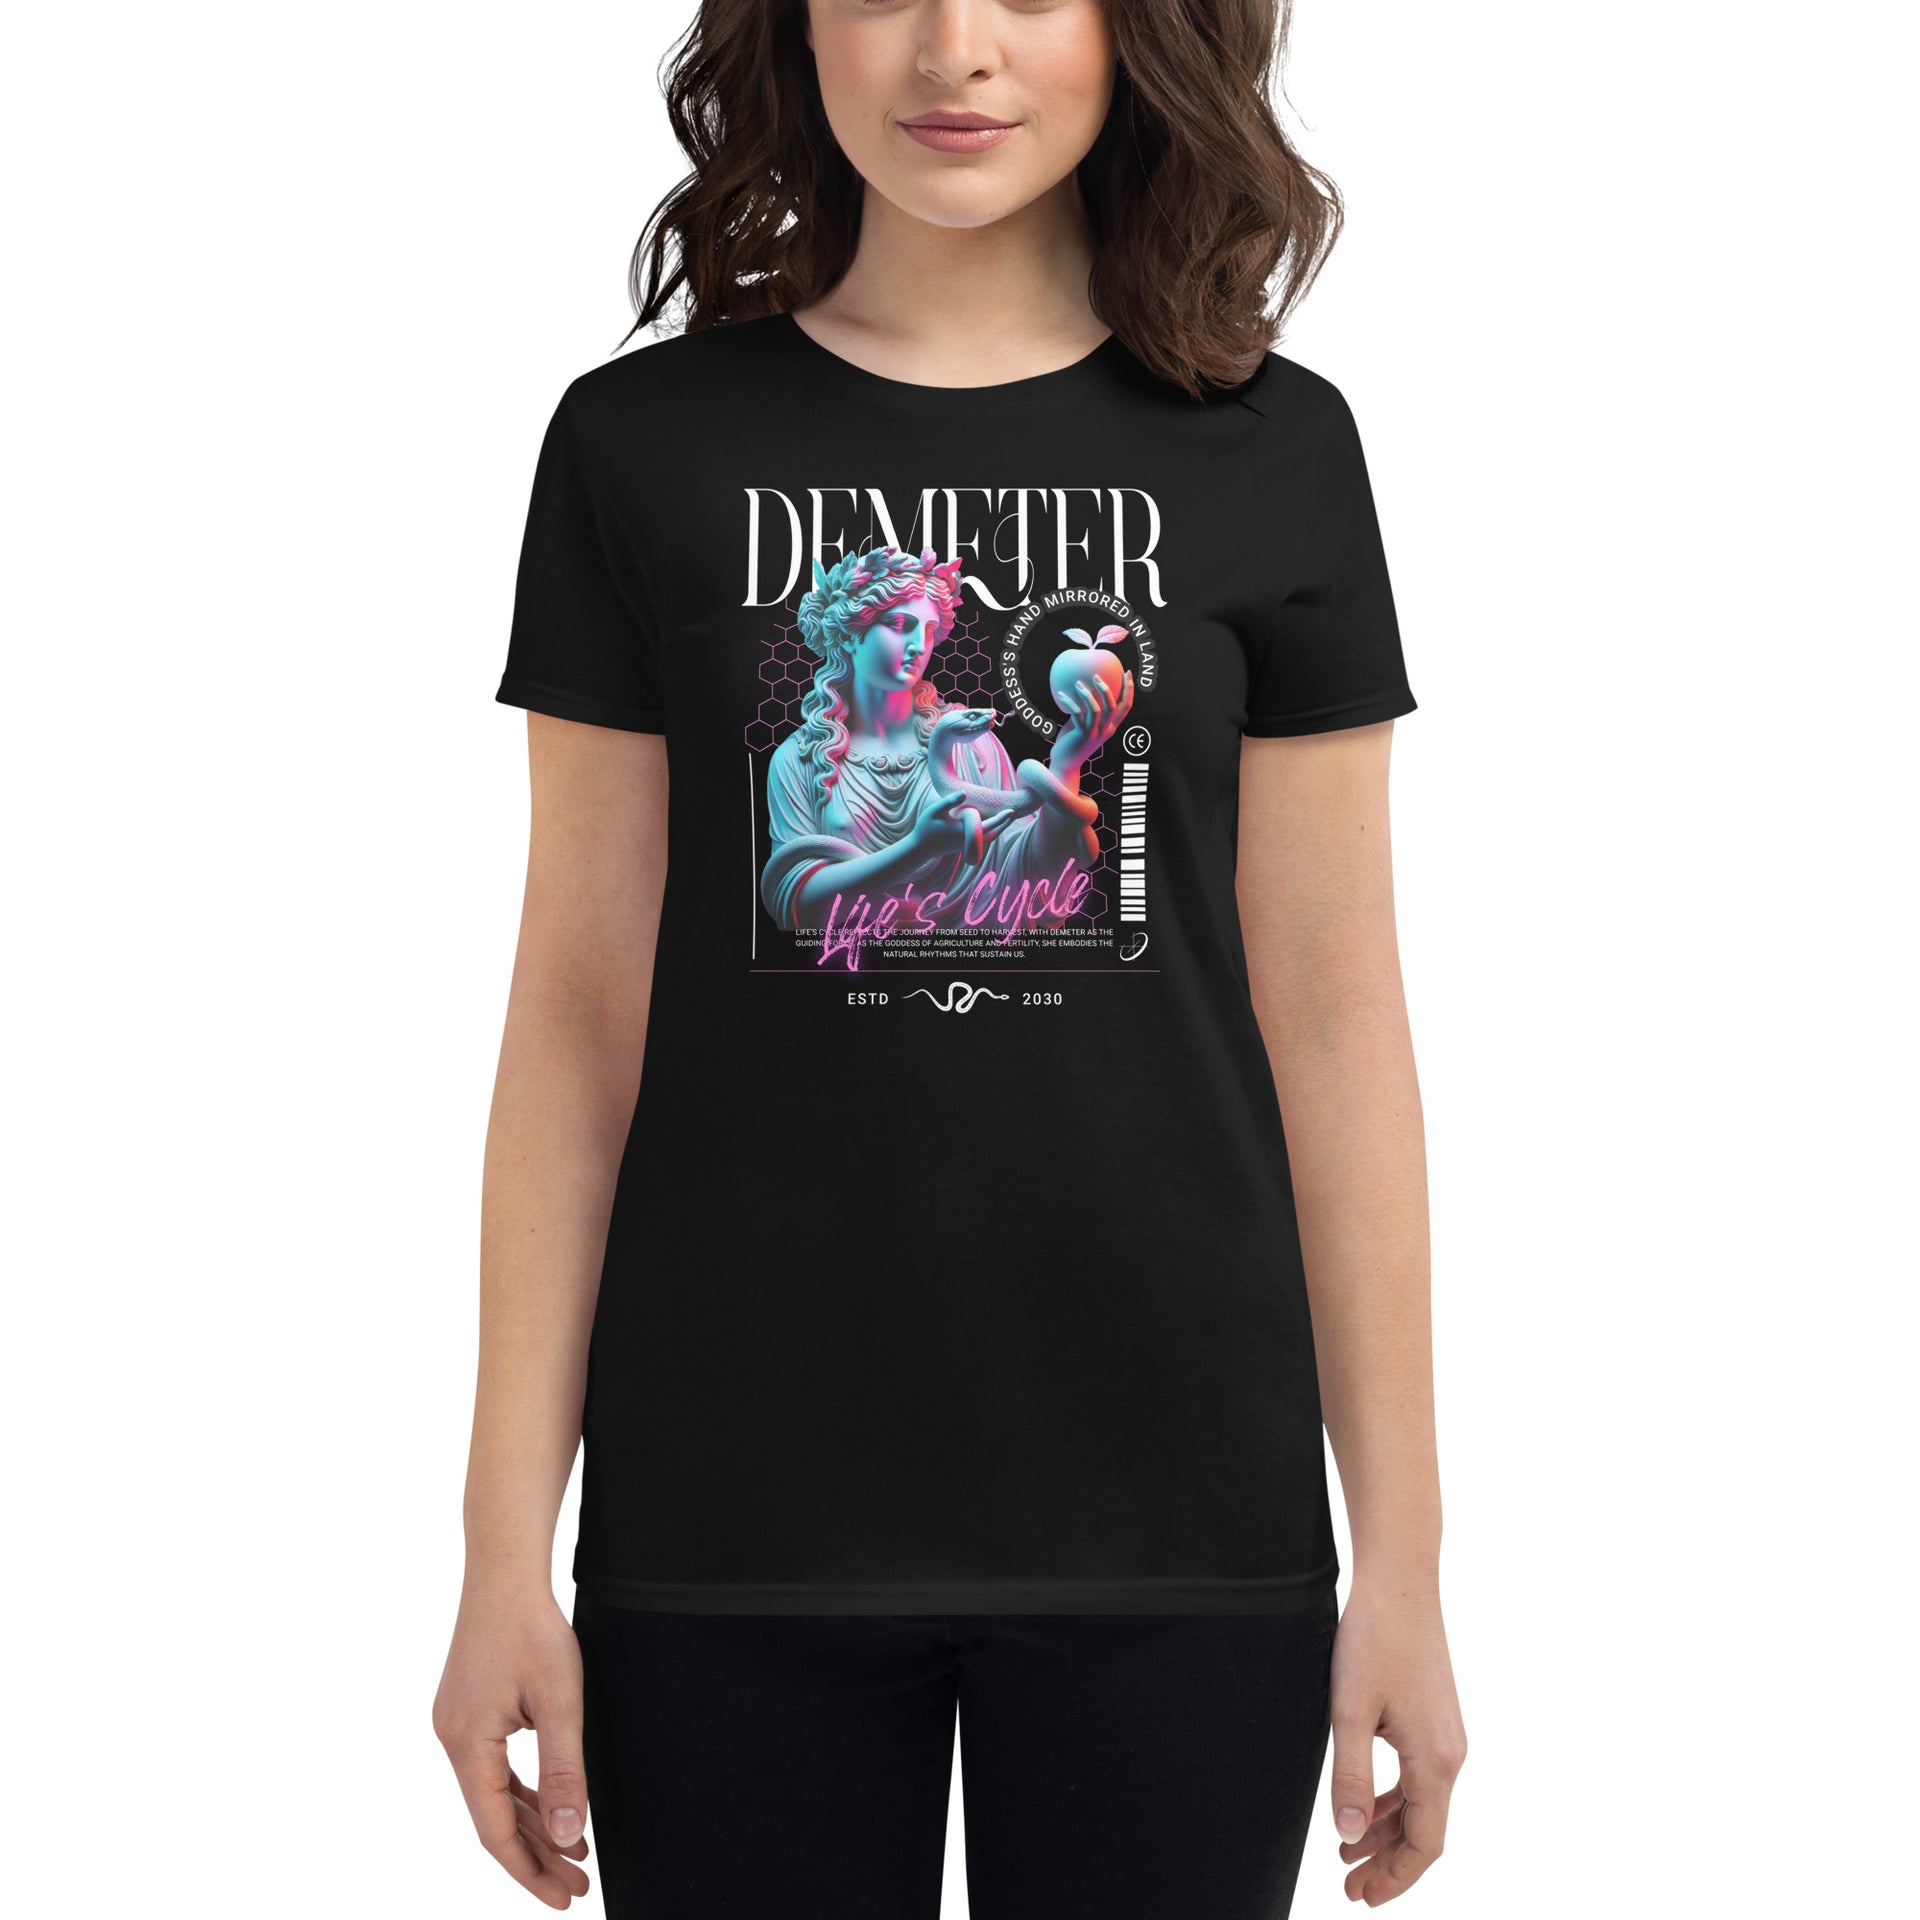 Retro Dementor Women's T-Shirt